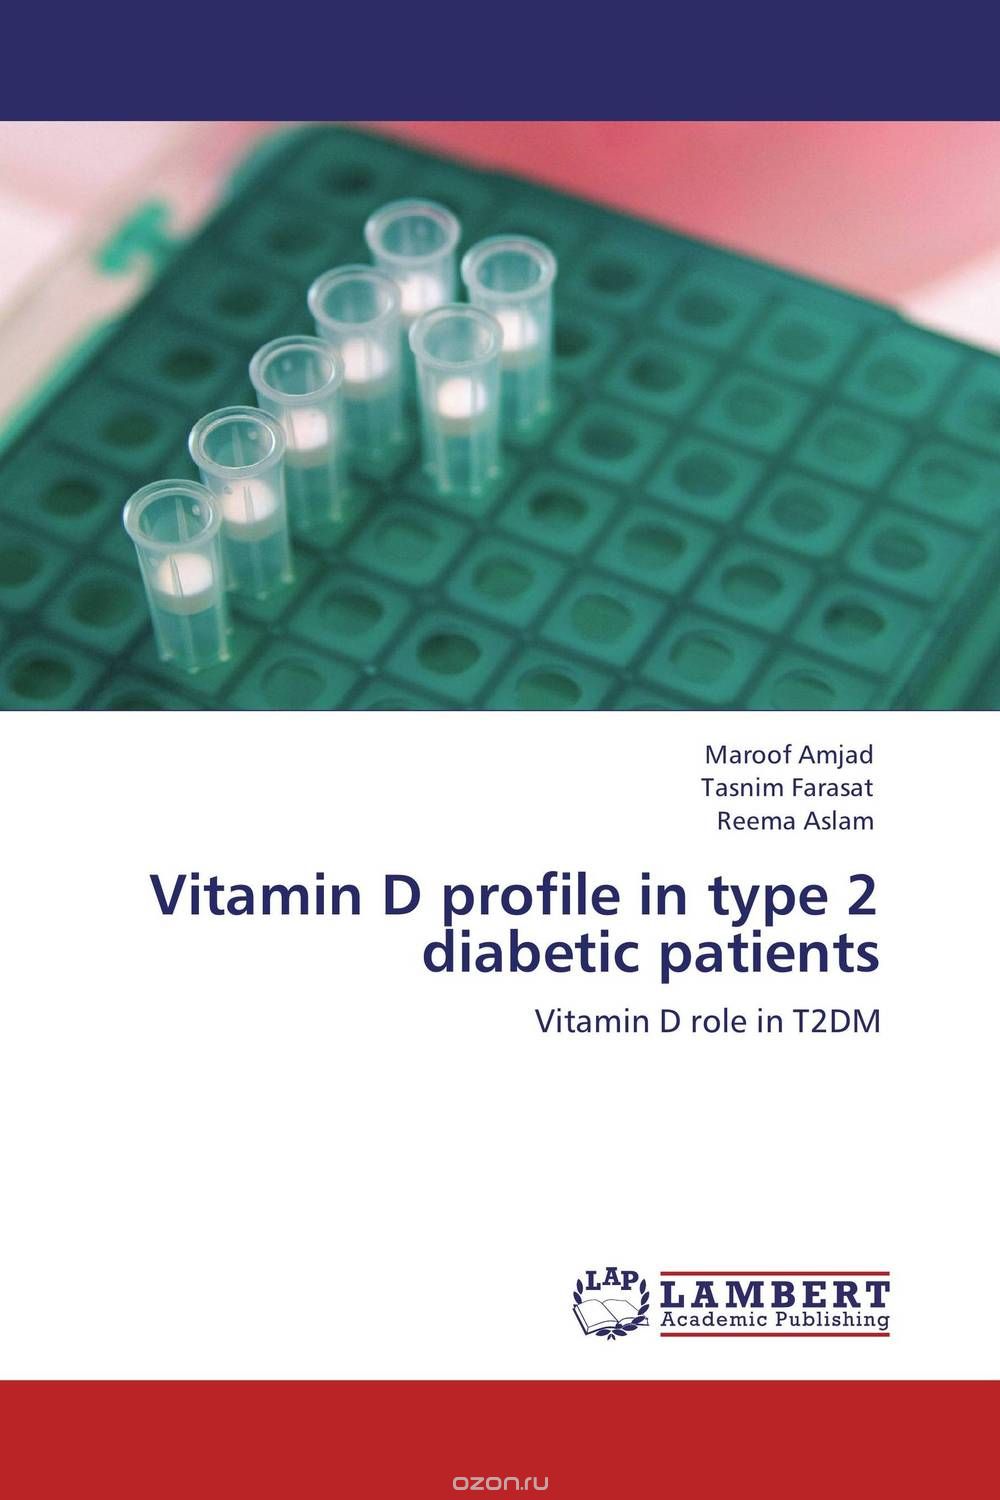 Скачать книгу "Vitamin D profile in type 2 diabetic patients"